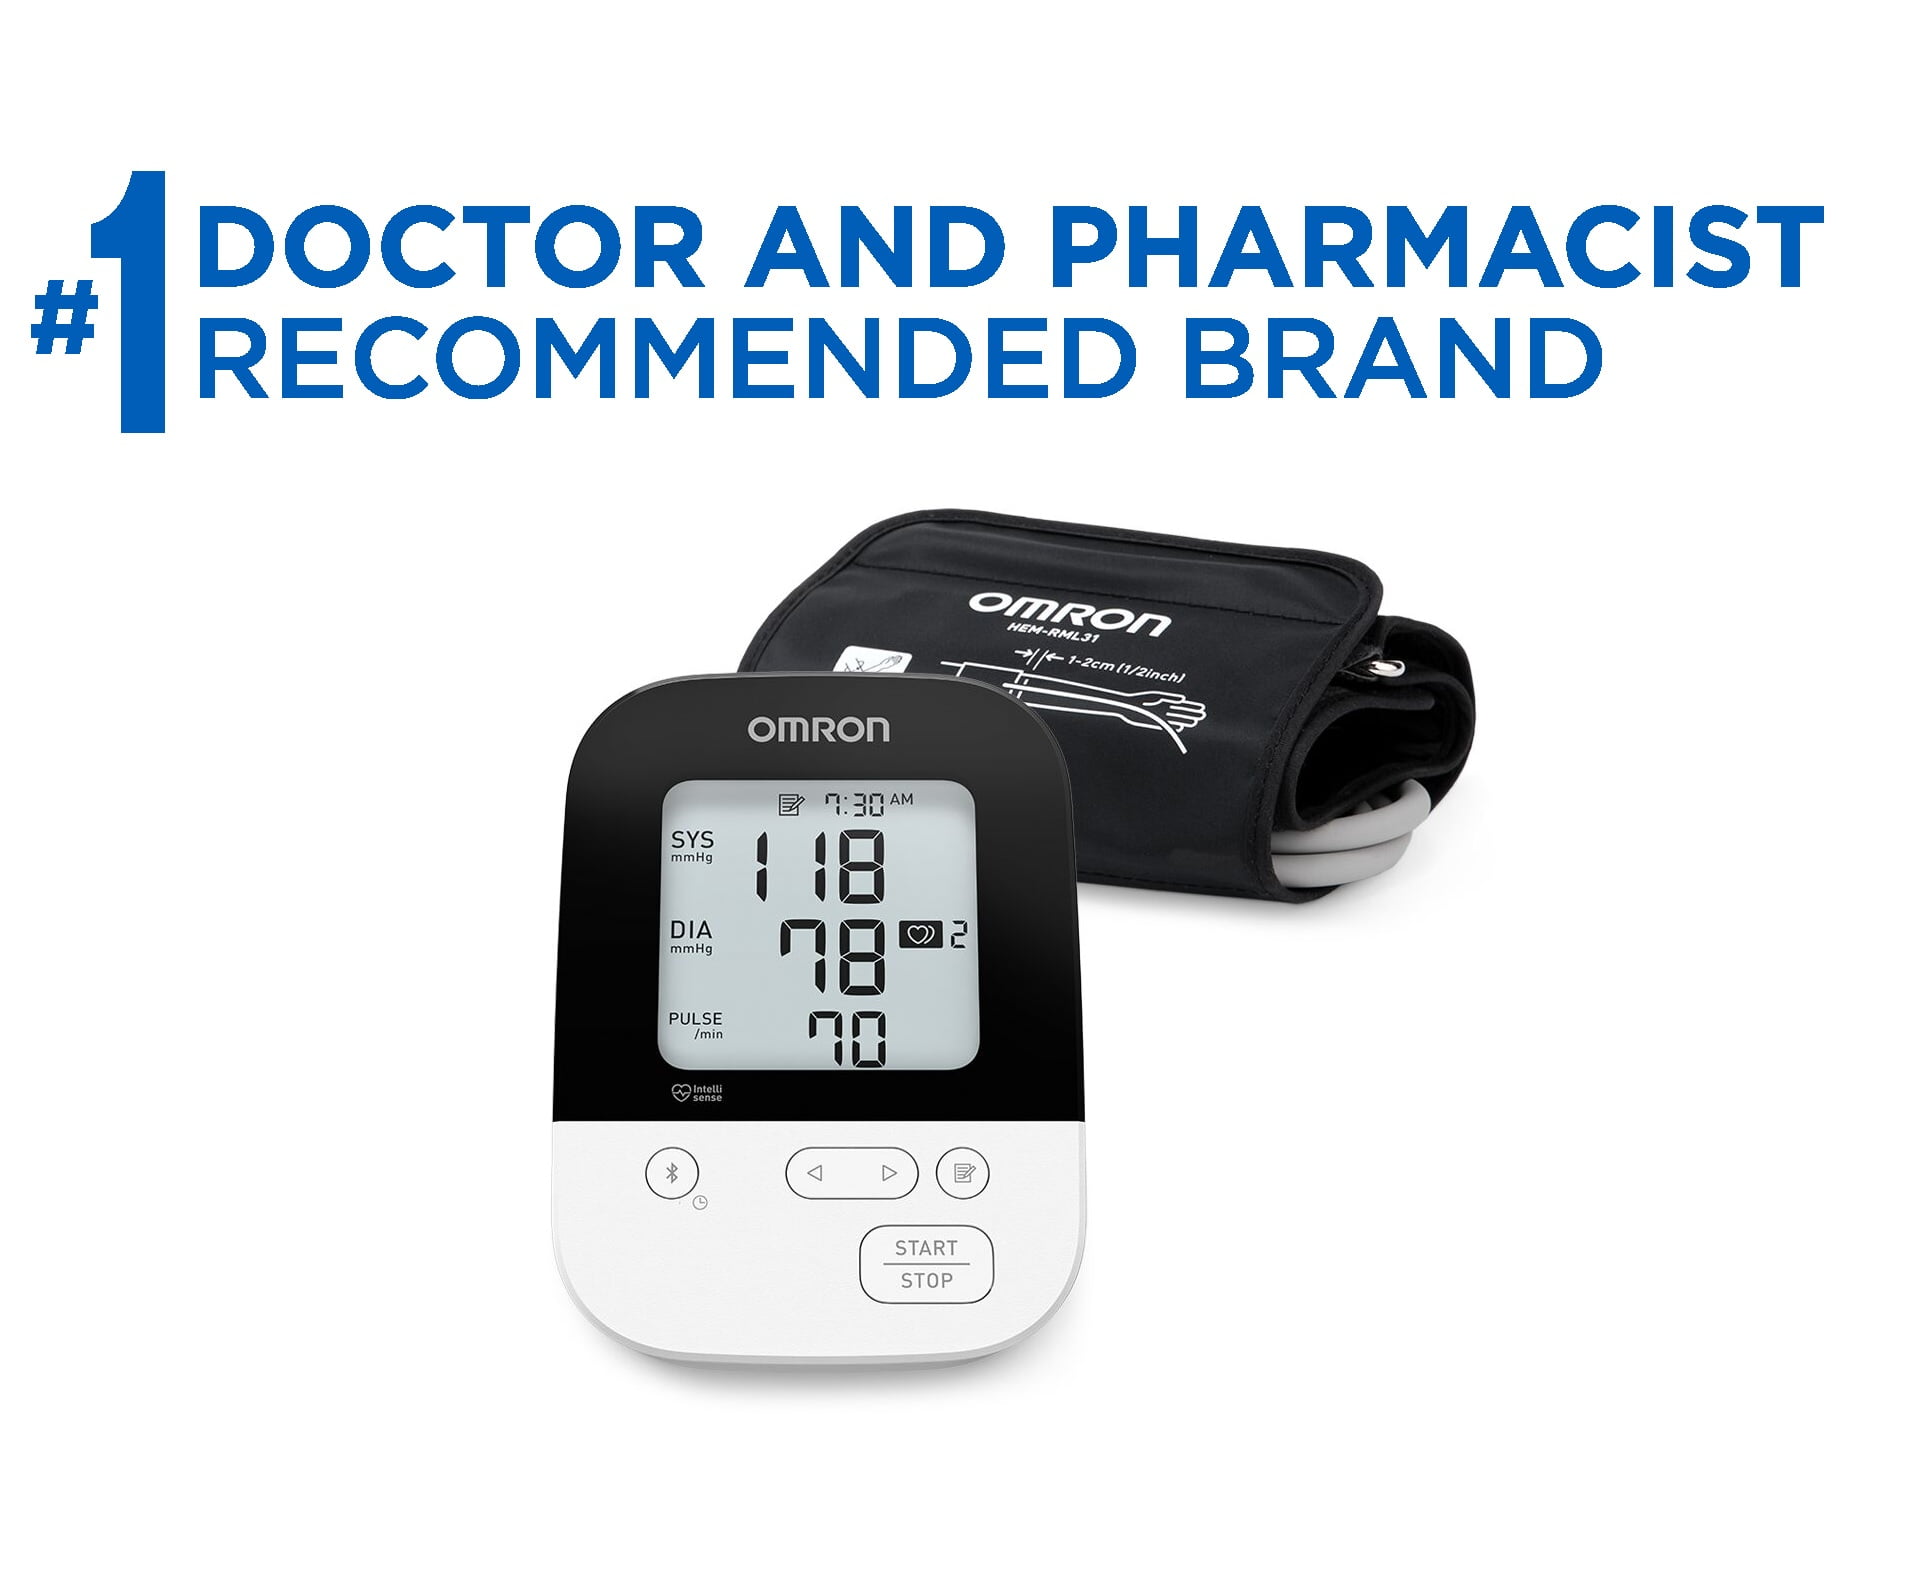 OMRON 5 Series Wireless Upper Arm Blood Pressure Monitor (Model BP7250)